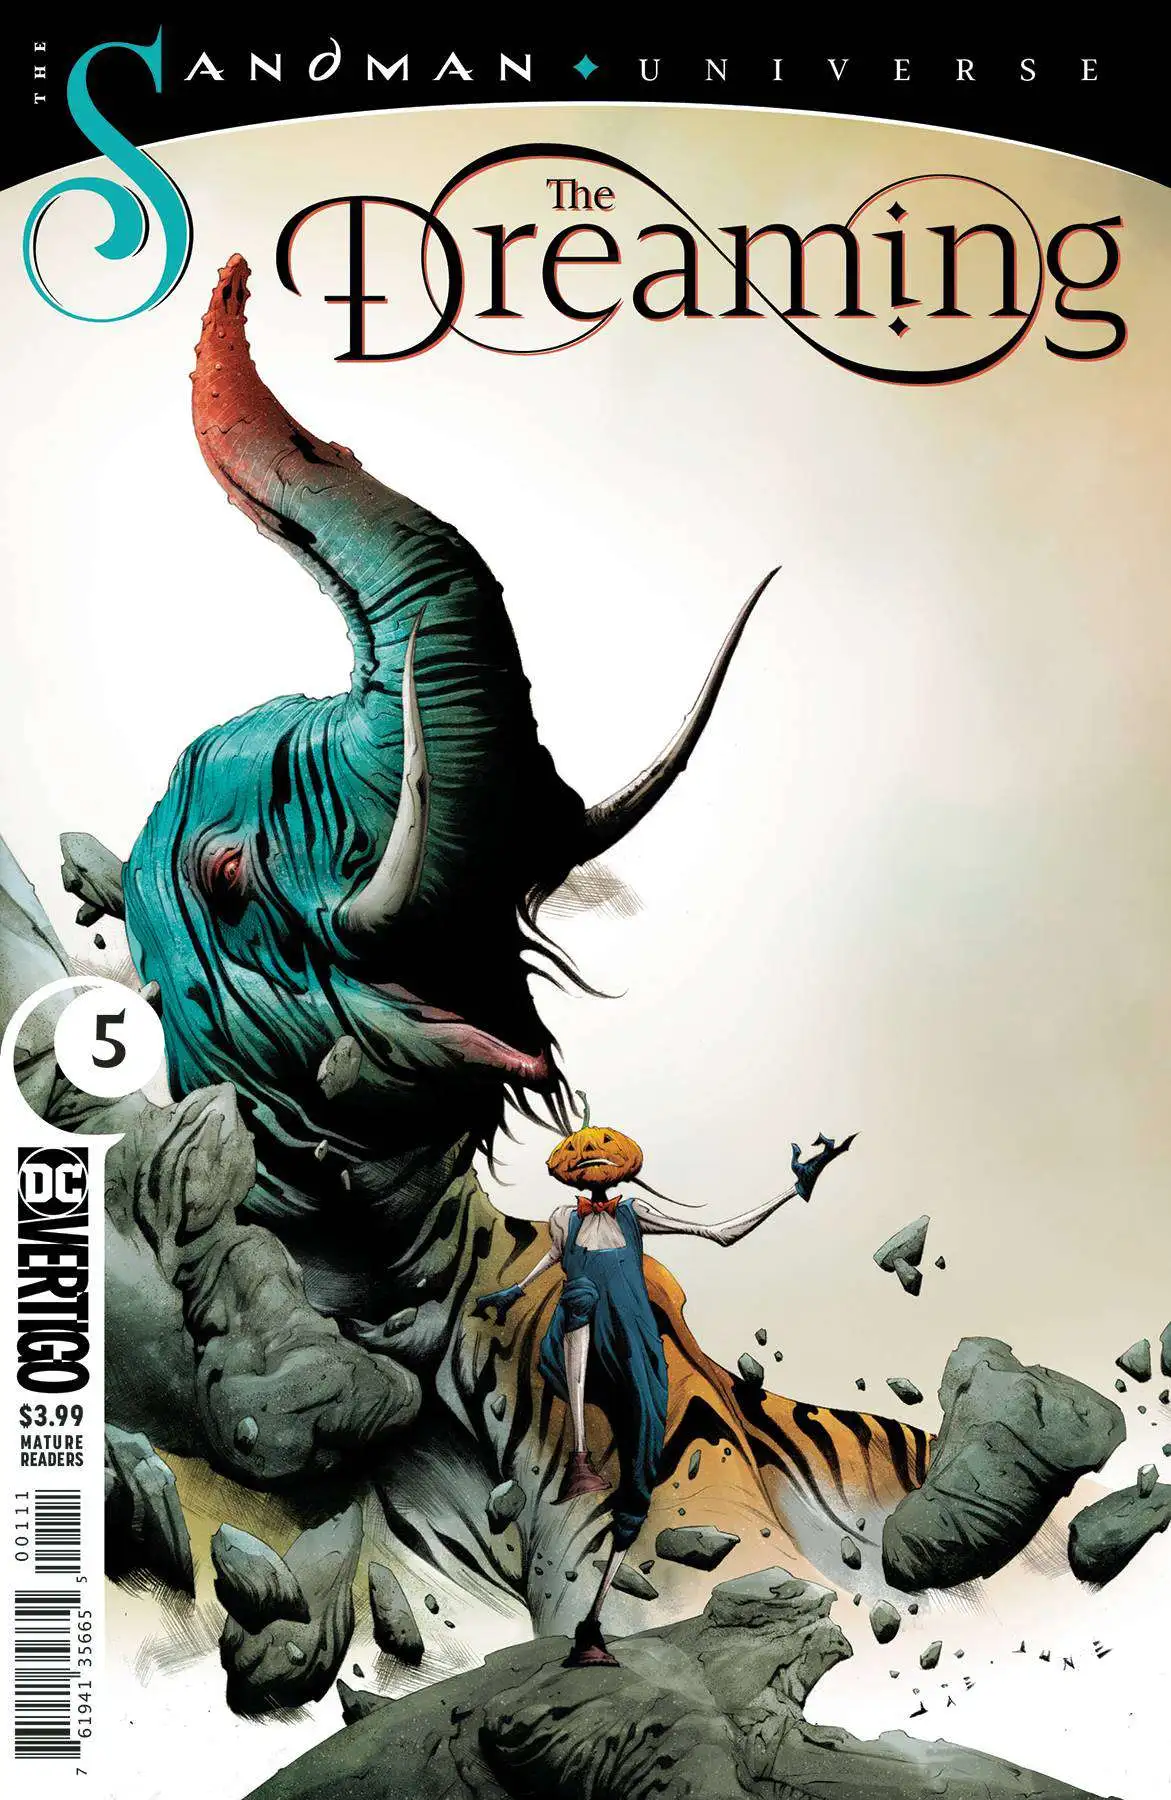 The Dreaming #5 Main Cover DC Comics 2019 Sandman Universe 